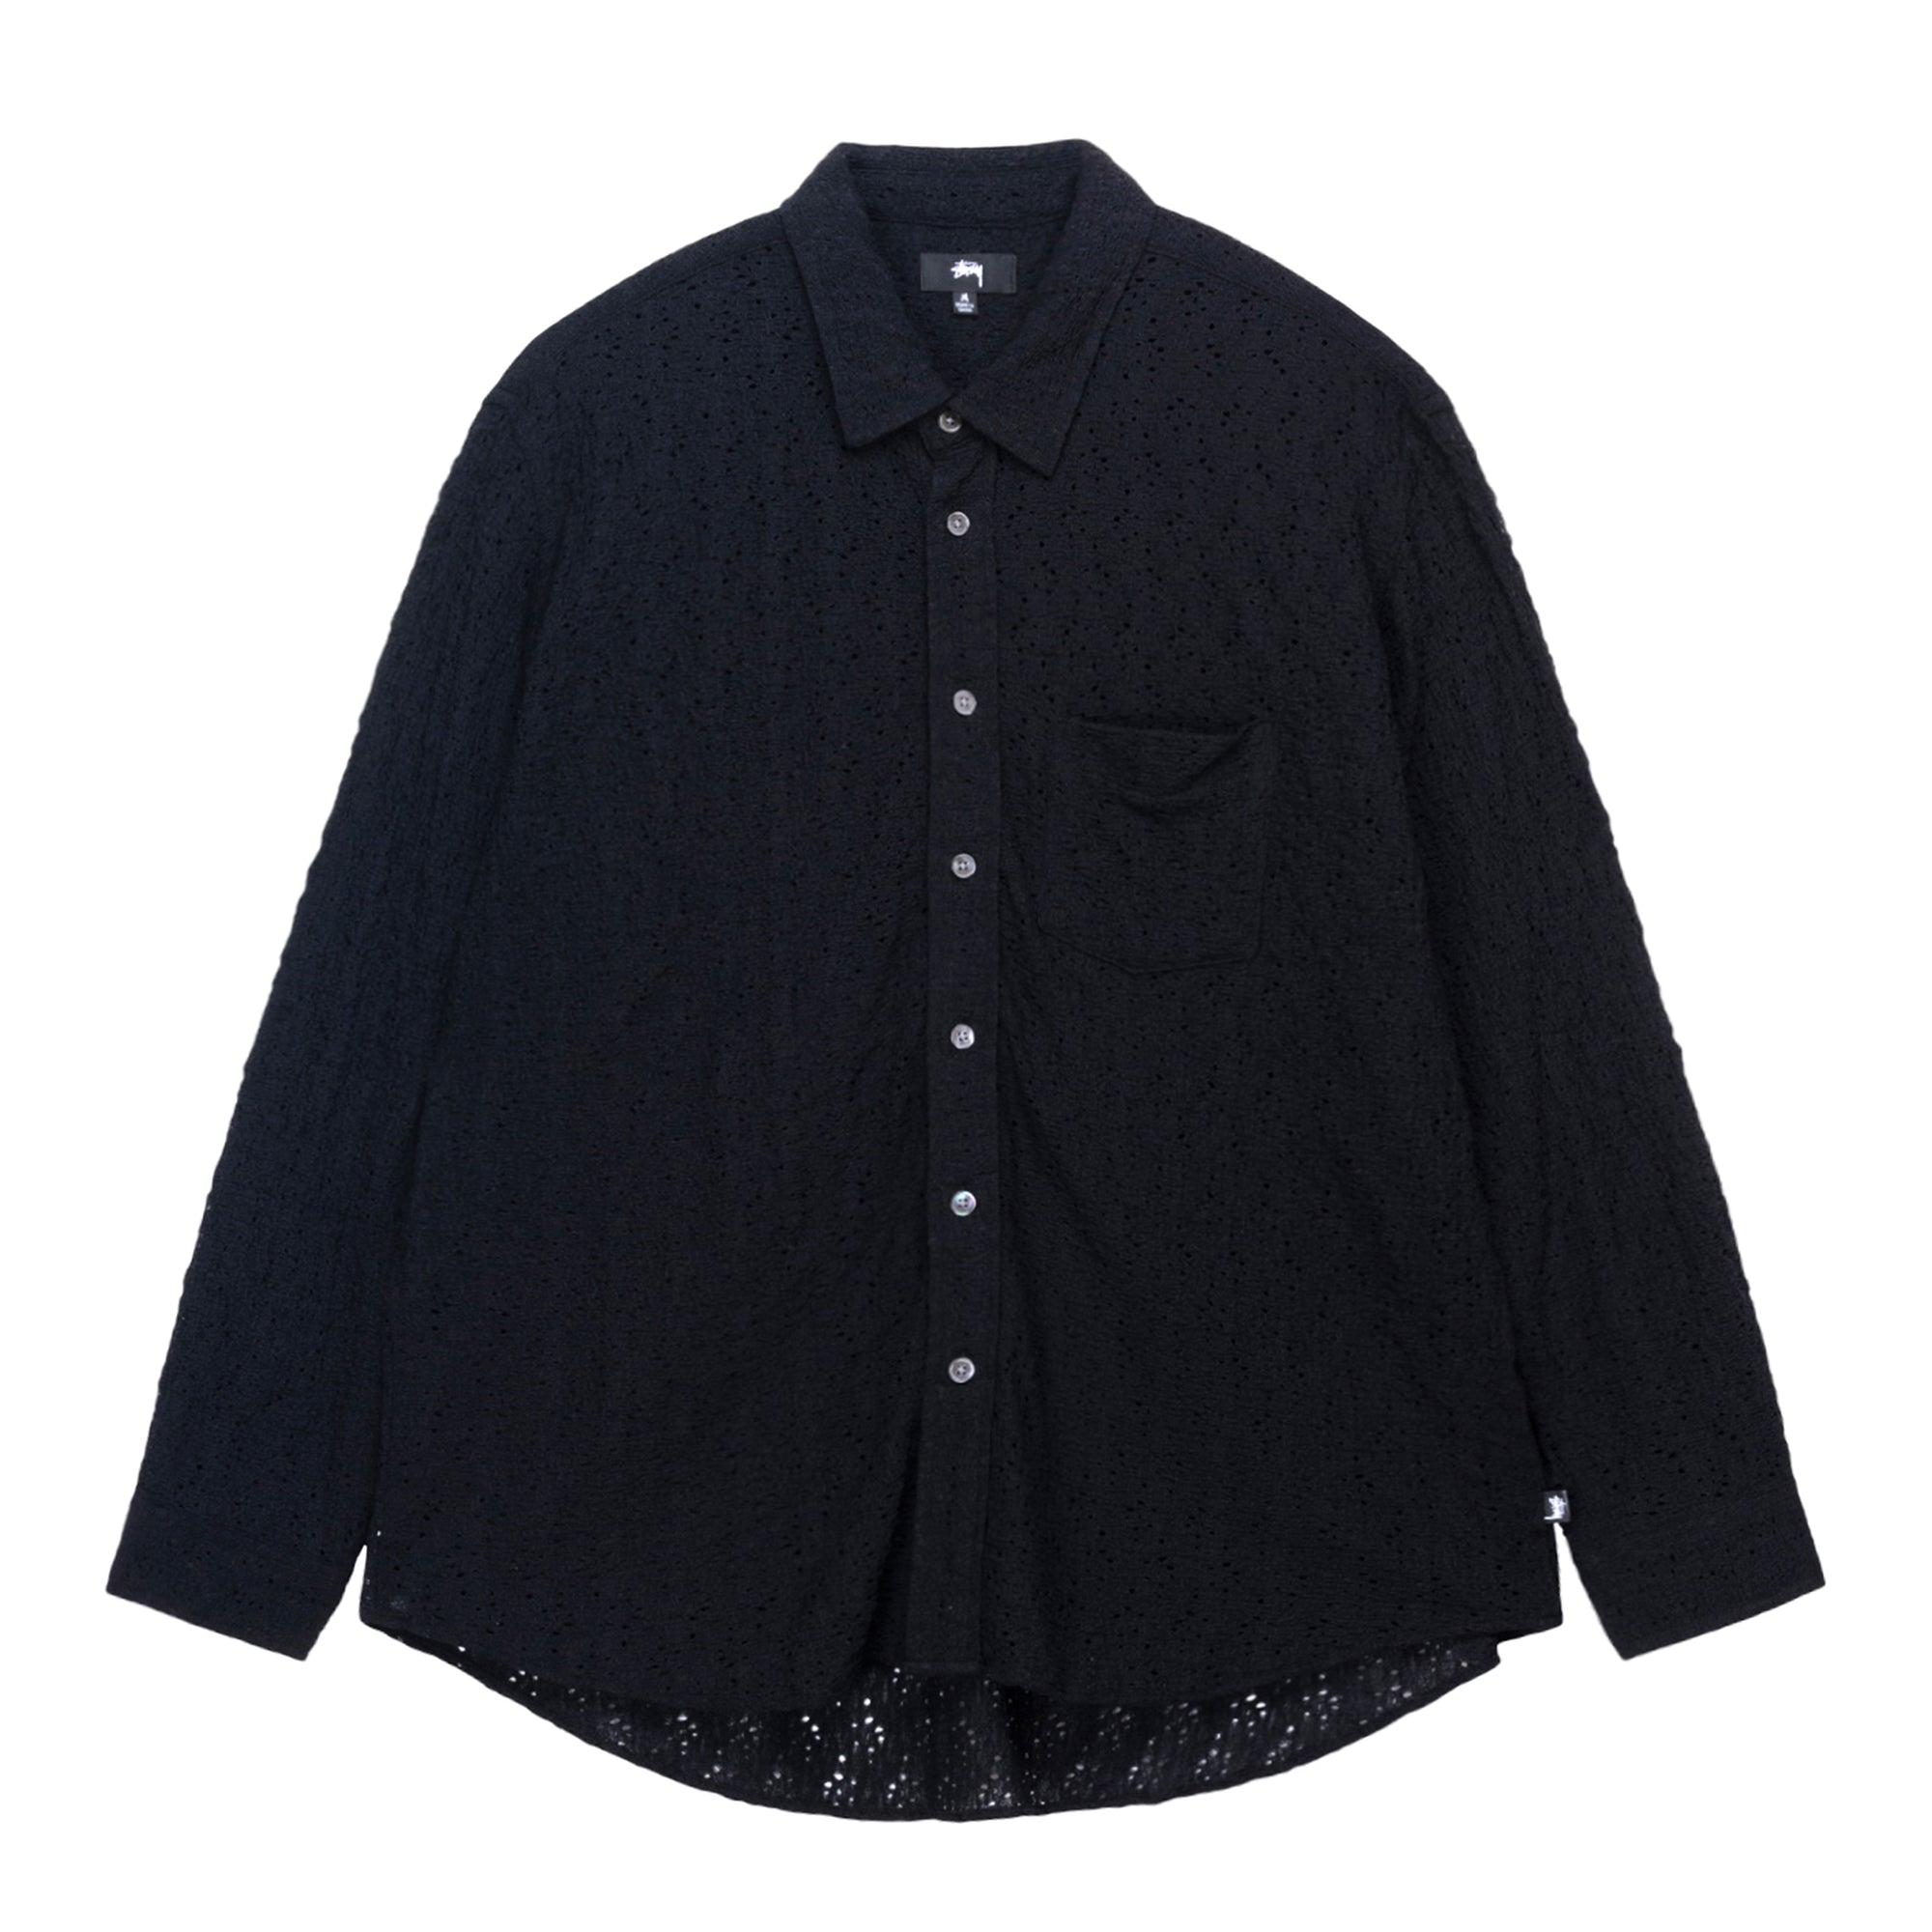 Stüssy - Lace Ls Shirt - (Black) view 1